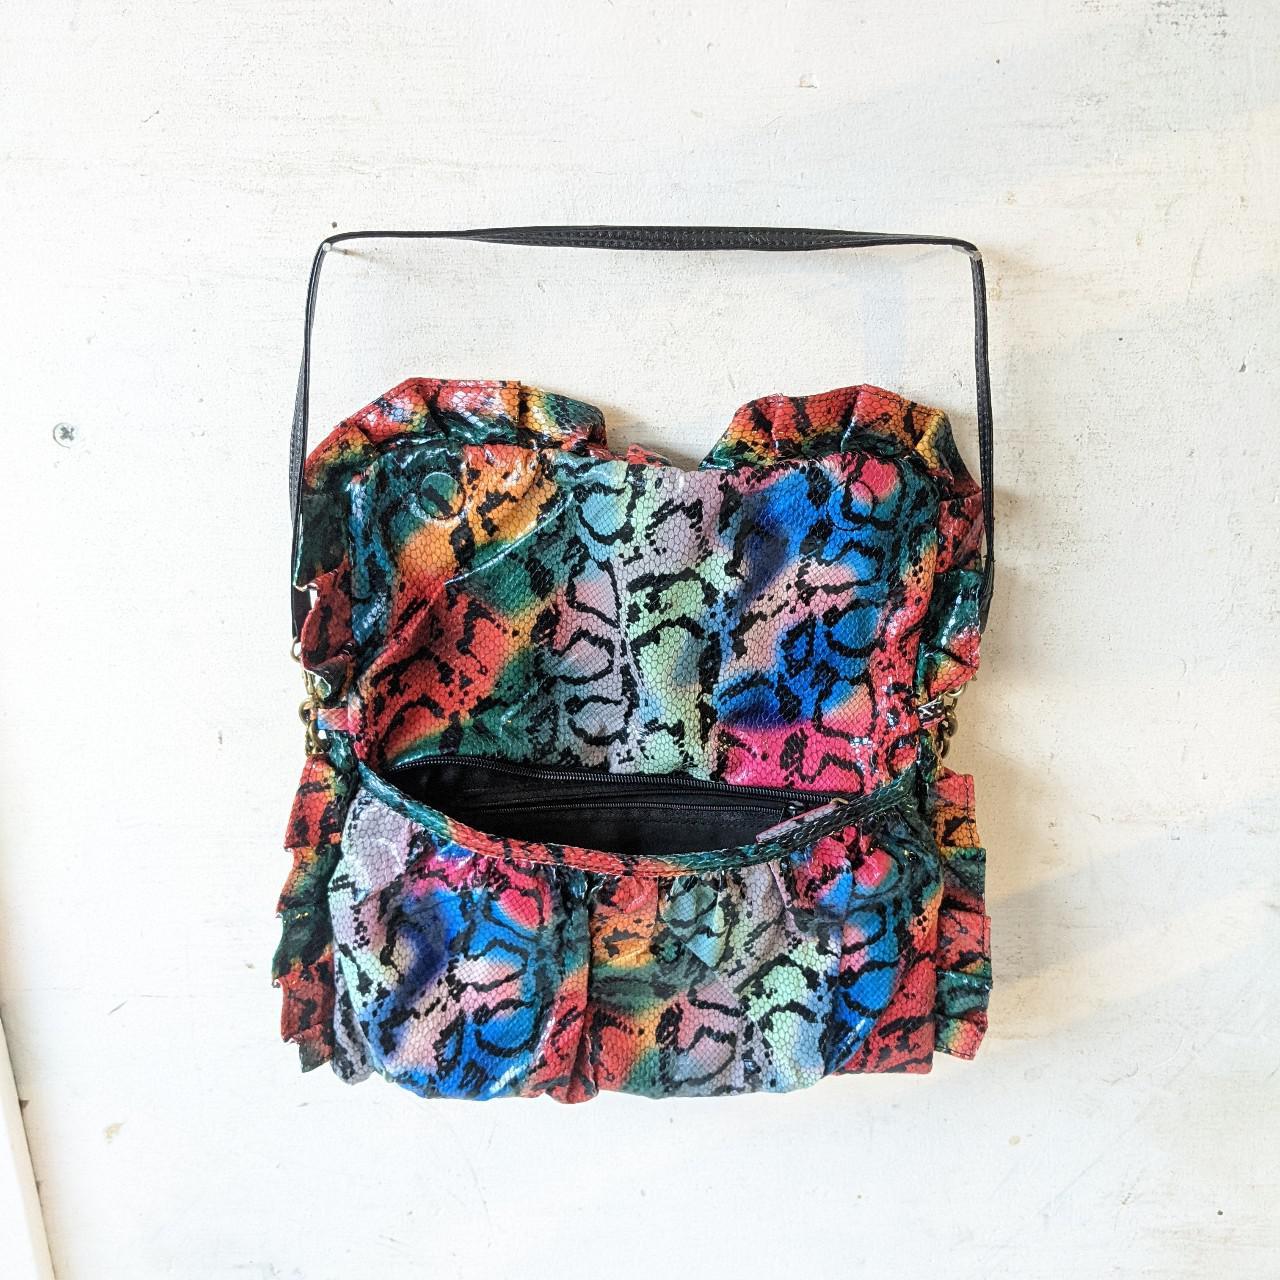 Product Image 2 - Beautiful FIORELLI clutch bag

Multicoloured snakeskin